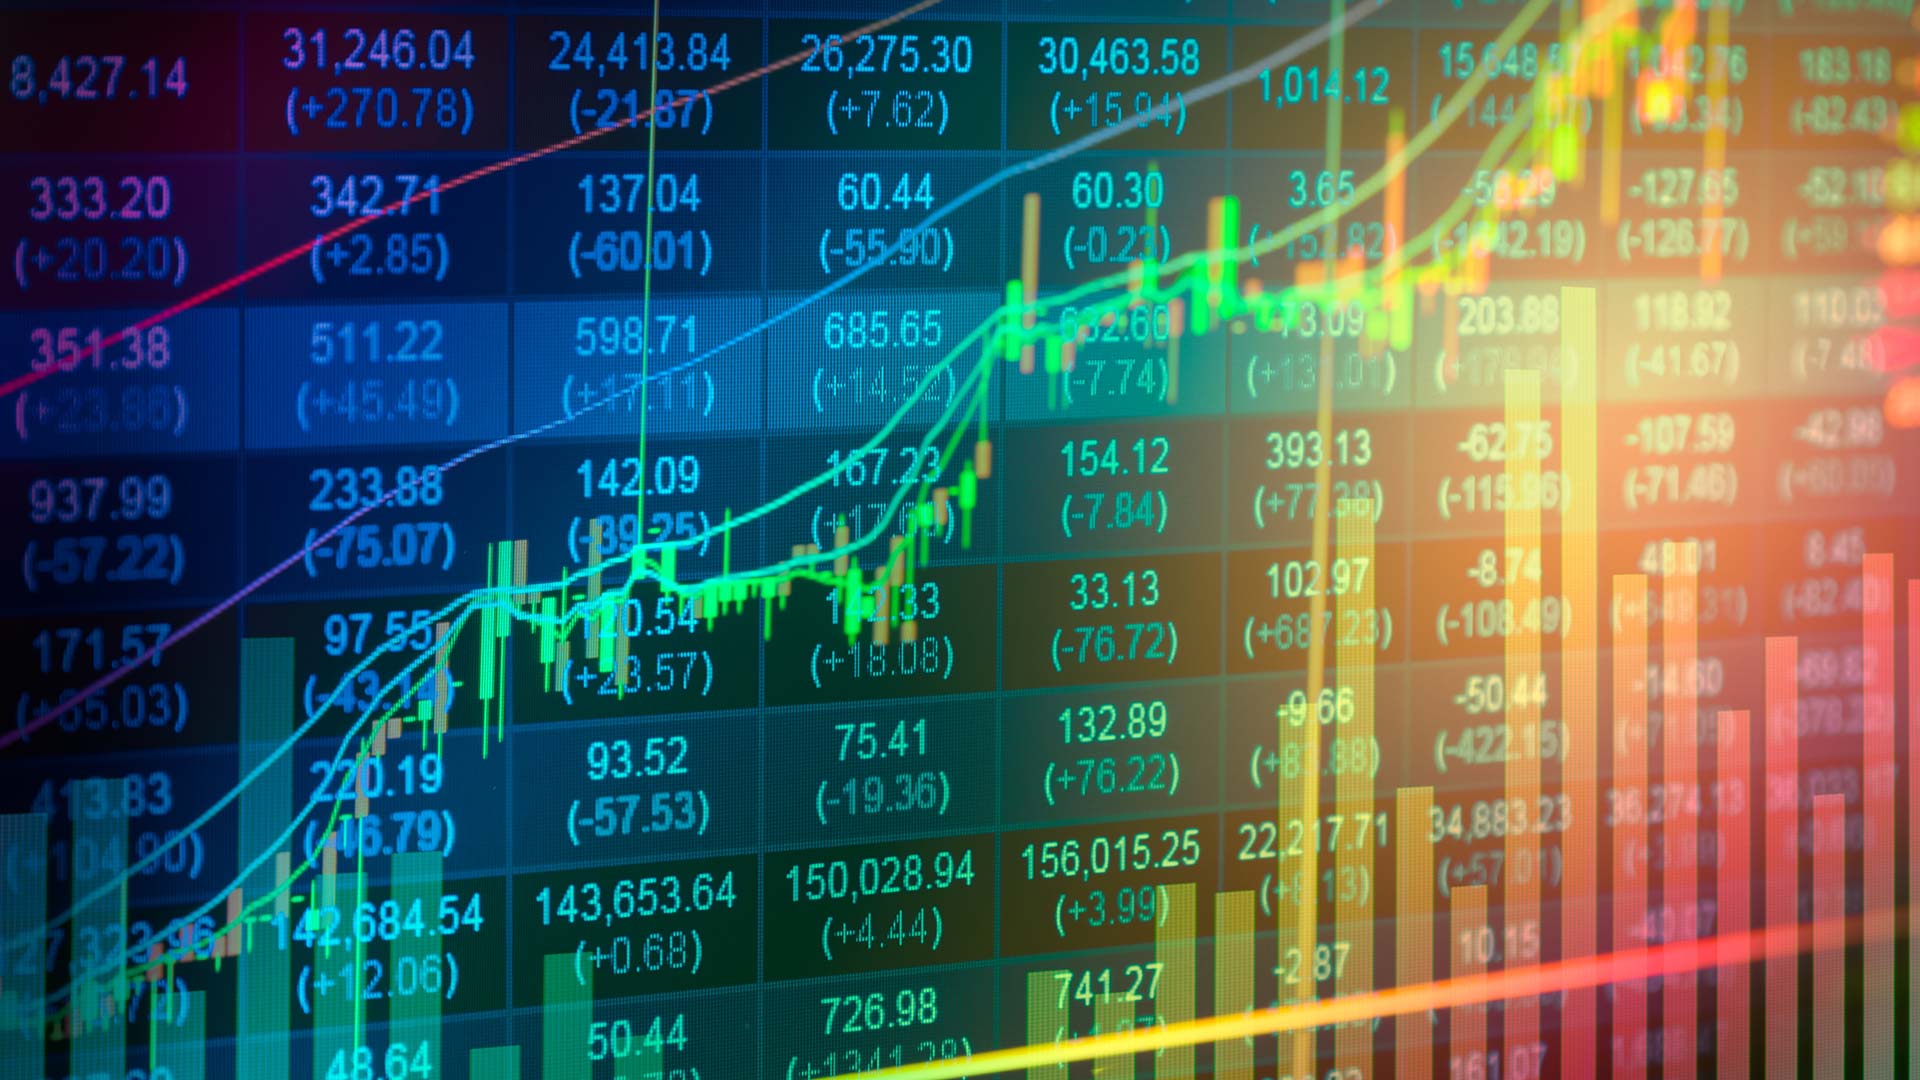 Refinitiv Shocked By FX Trading Glitch on Its Financial Data Platforms